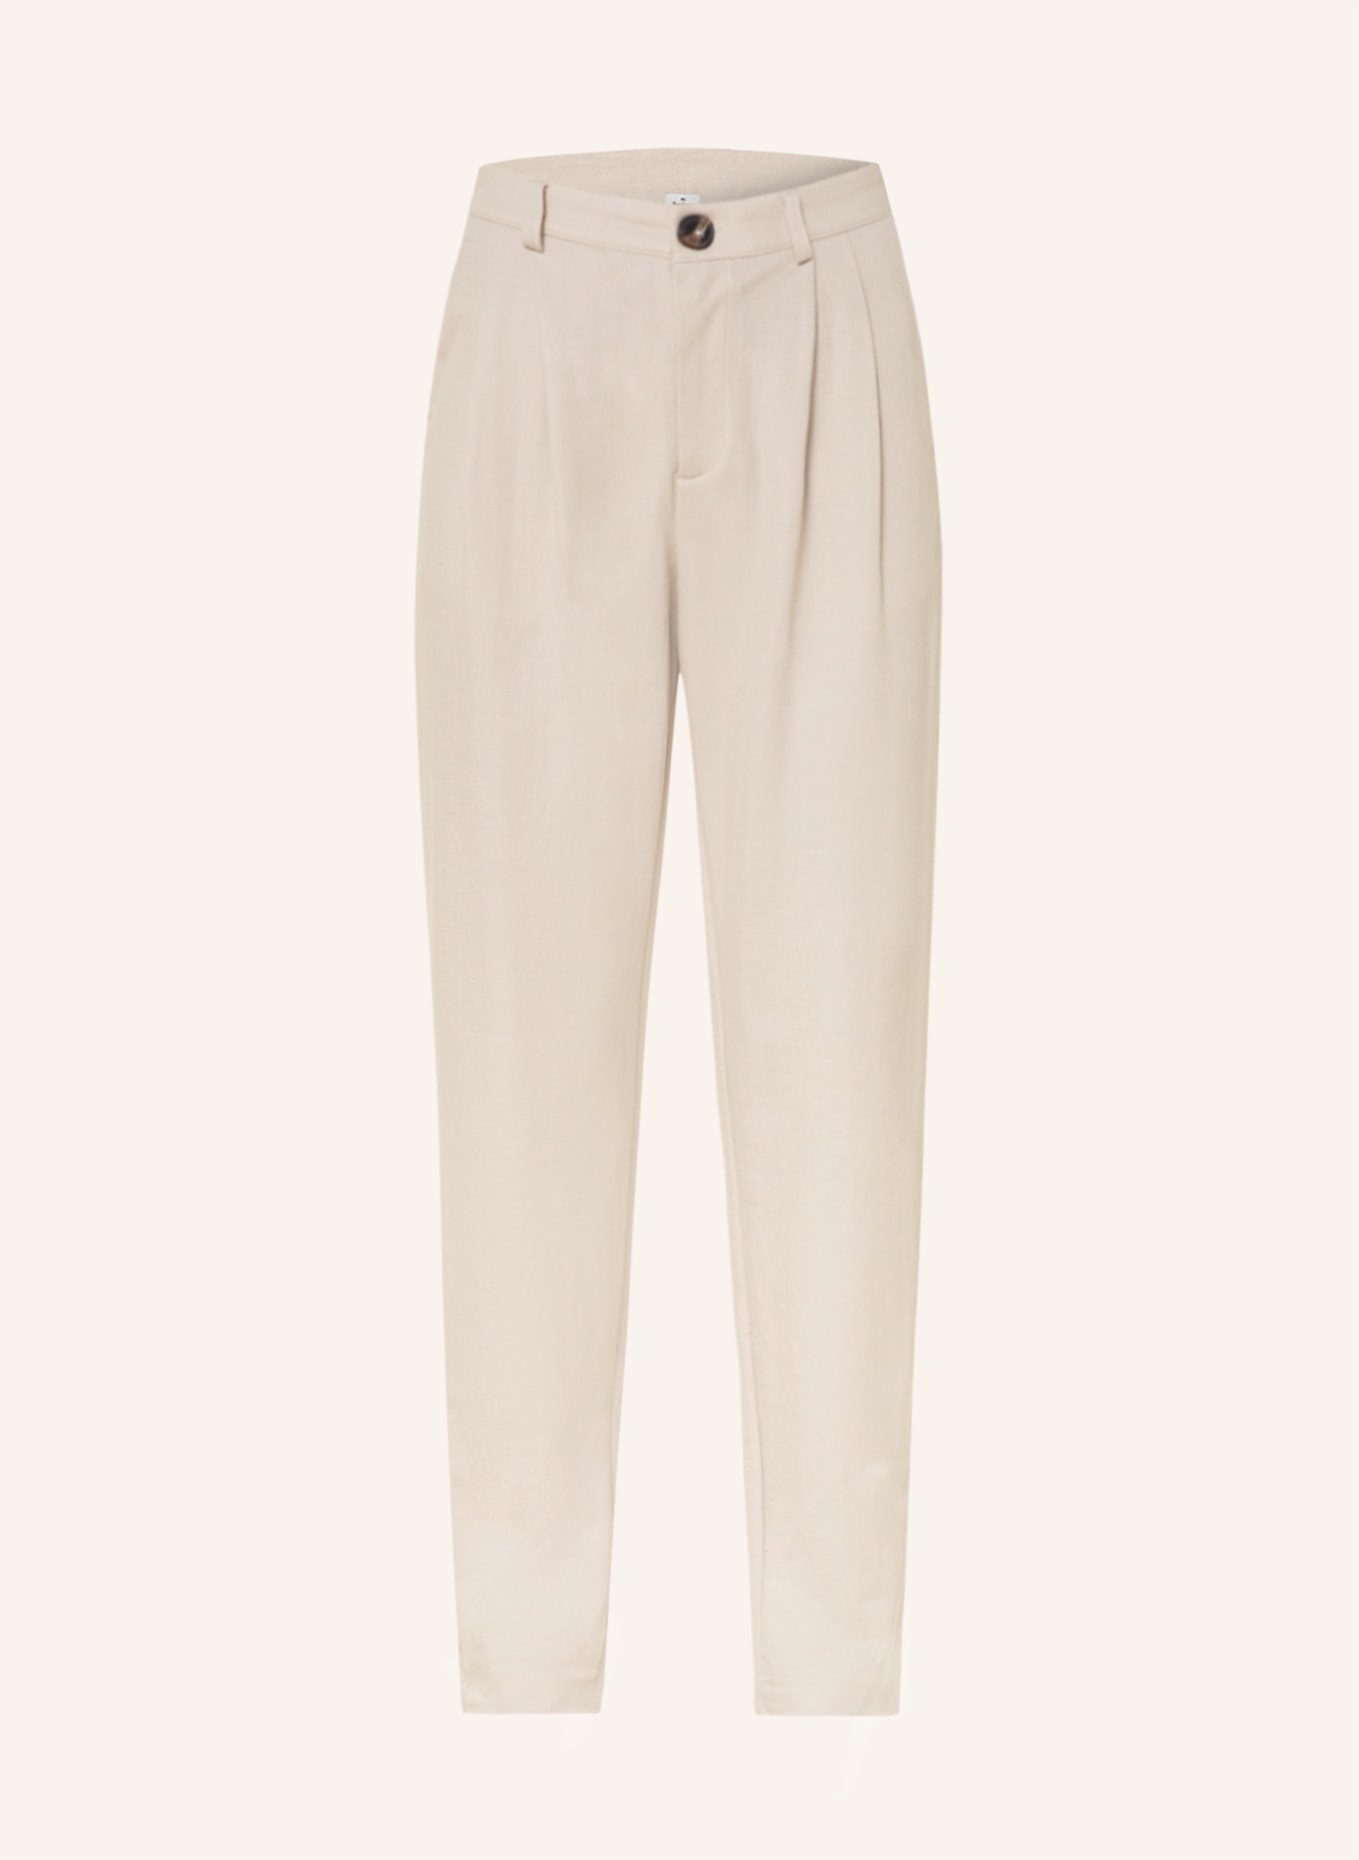 Pepe Jeans CLOE - Trousers - stone/beige - Zalando.de